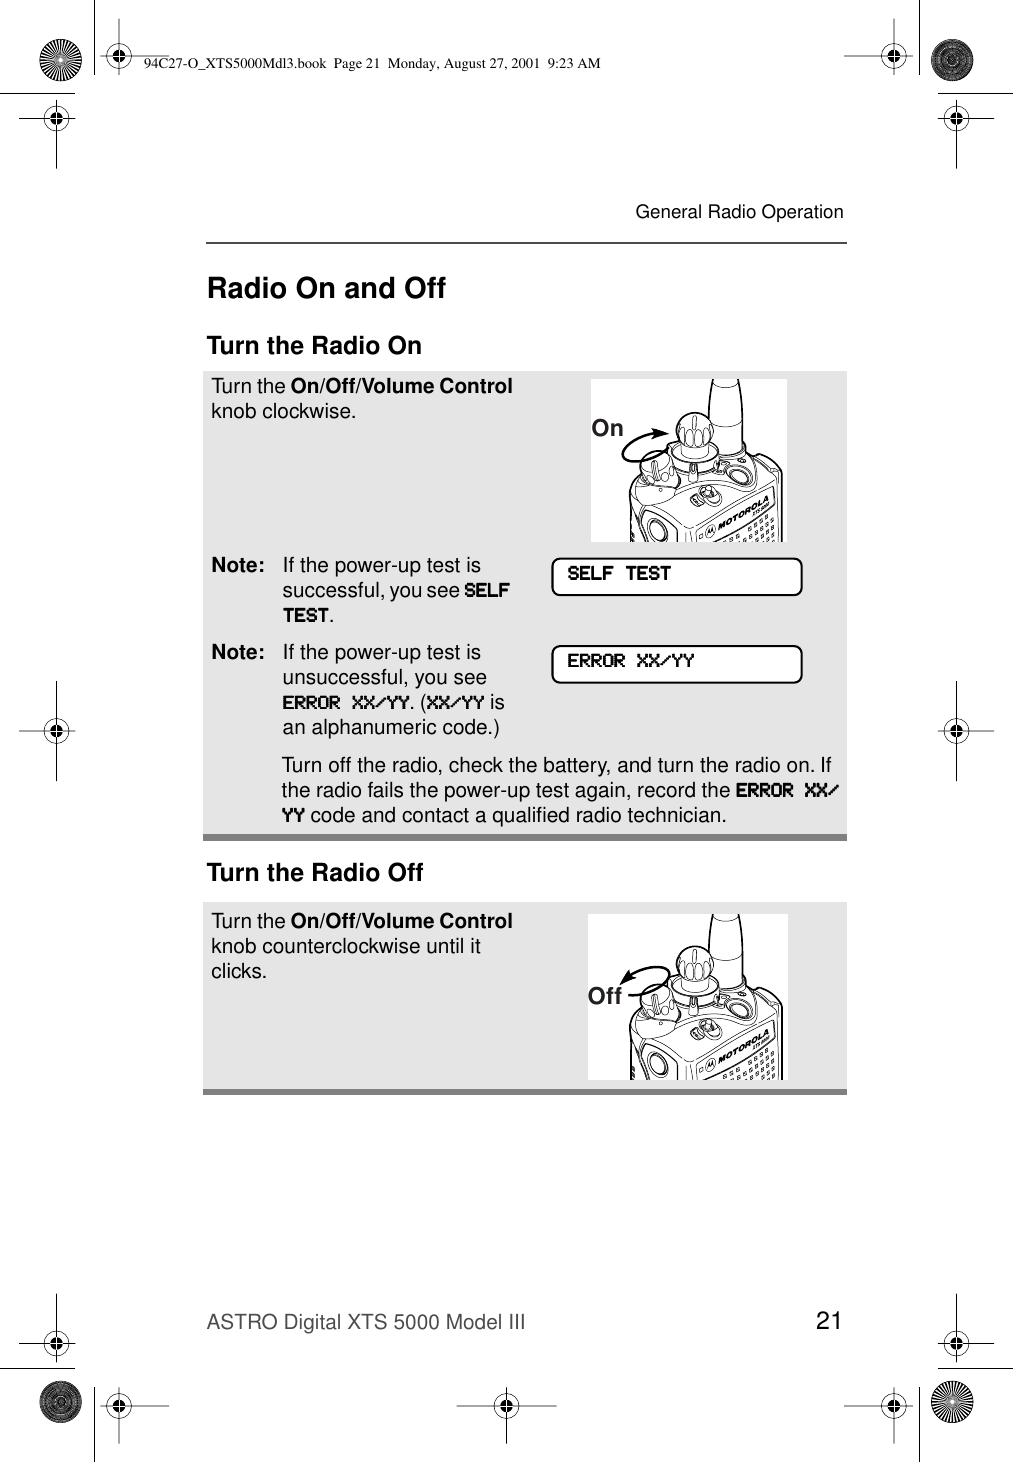 ASTRO Digital XTS 5000 Model III 21General Radio OperationRadio On and OffTurn the Radio OnTurn the Radio OffTurn the On/Off/Volume Control knob clockwise.Note: If the power-up test is successful, you see SSSSEEEELLLLFFFF    TTTTEEEESSSSTTTT.Note: If the power-up test is unsuccessful, you see EEEERRRRRRRROOOORRRR    XXXXXXXX////YYYYYYYY. (XXXXXXXX////YYYYYYYY is an alphanumeric code.) Turn off the radio, check the battery, and turn the radio on. If the radio fails the power-up test again, record the EEEERRRRRRRROOOORRRR    XXXXXXXX////YYYYYYYY code and contact a qualiﬁed radio technician.Turn the On/Off/Volume Control knob counterclockwise until it clicks.OnSSSSEEEELLLLFFFF    TTTTEEEESSSSTTTTEEEERRRRRRRROOOORRRR    XXXXXXXX////YYYYYYYYOff94C27-O_XTS5000Mdl3.book  Page 21  Monday, August 27, 2001  9:23 AM